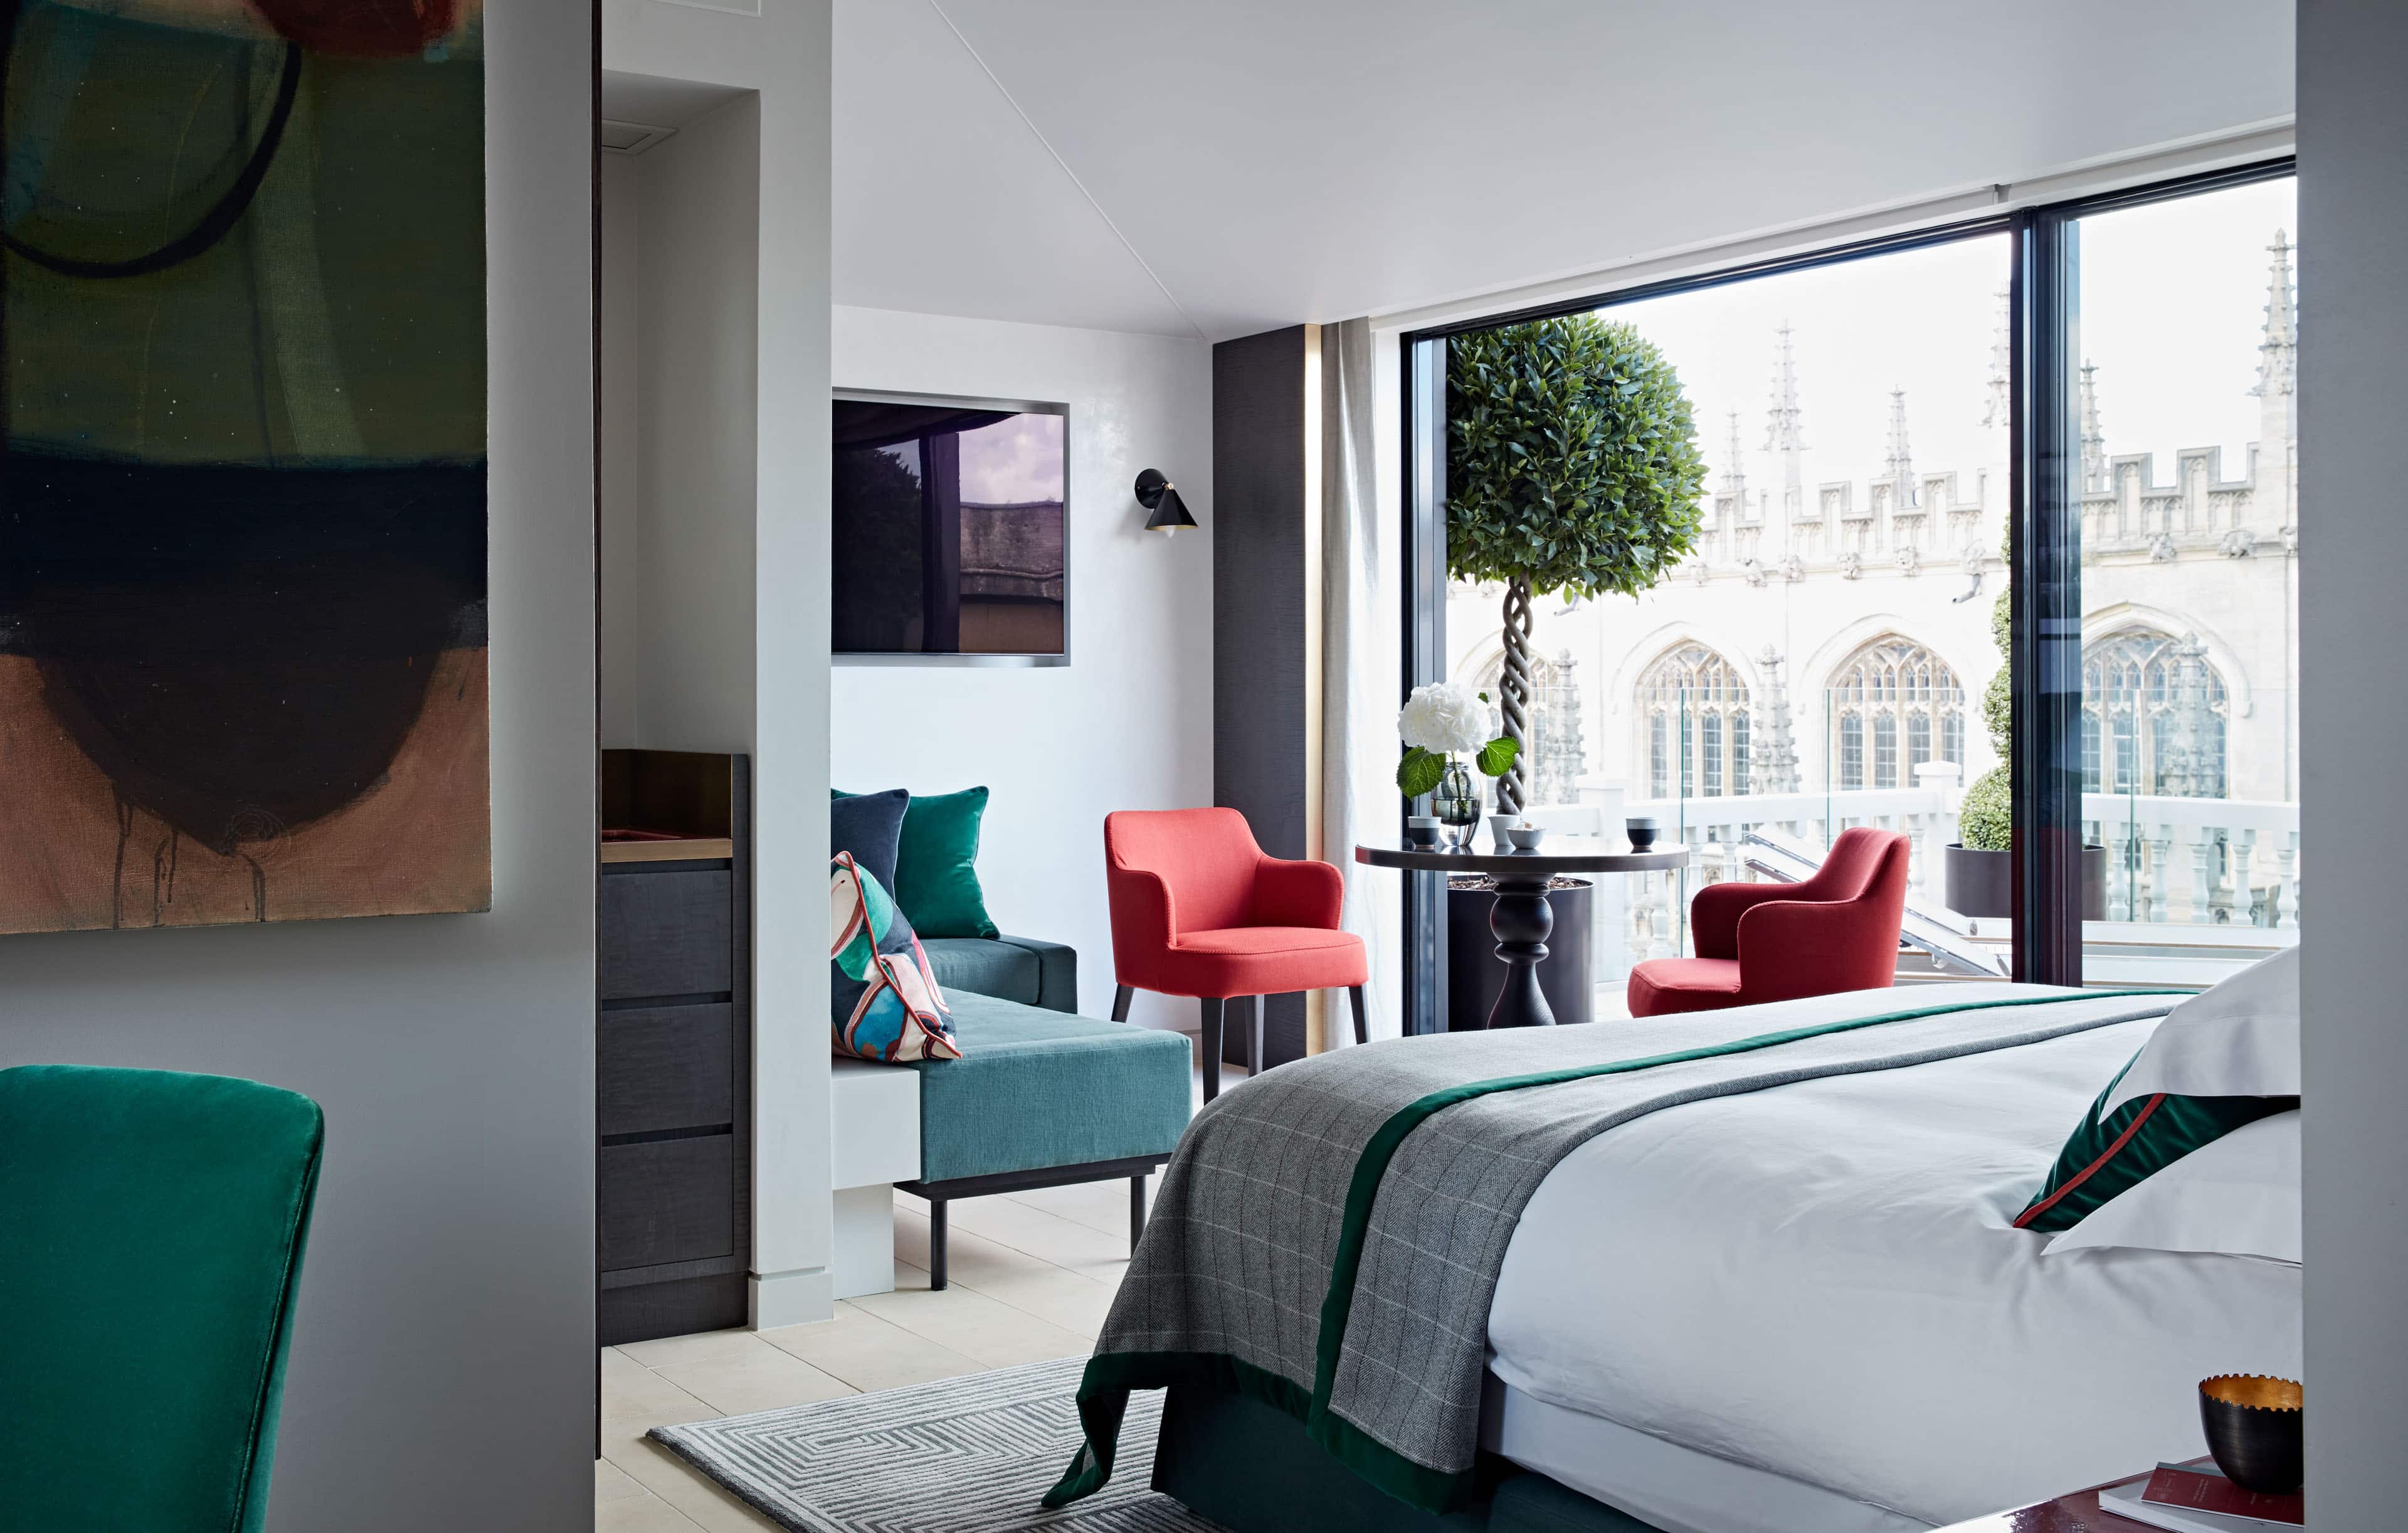 0015 - 2018 - Old Bank Hotel - Oxford - High Res - Room 1 Bedroom Modern Art - Web Hero